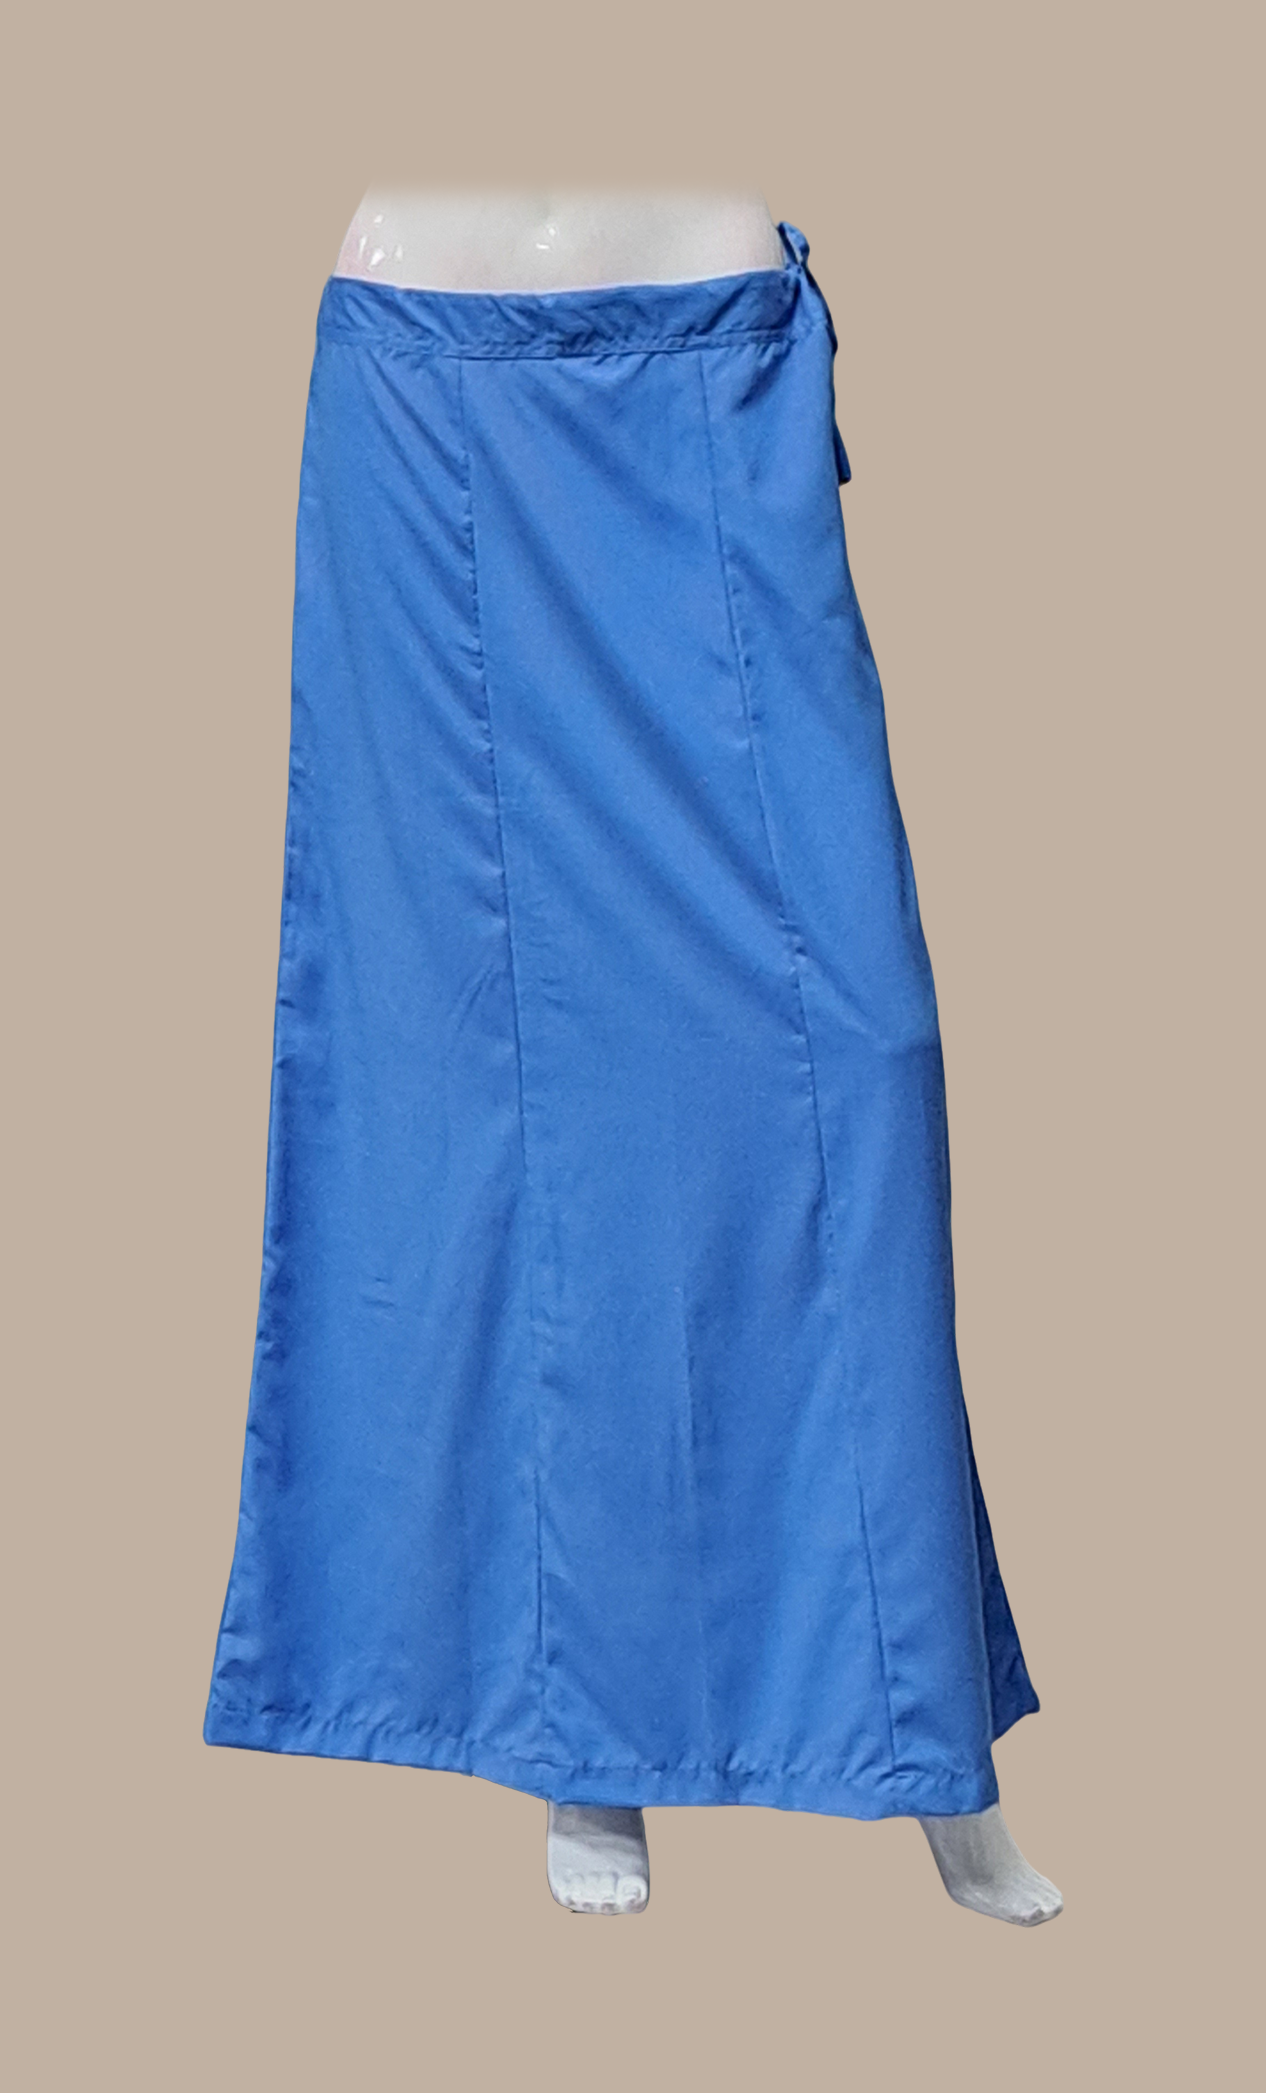 Medium Blue Cotton Under Skirt